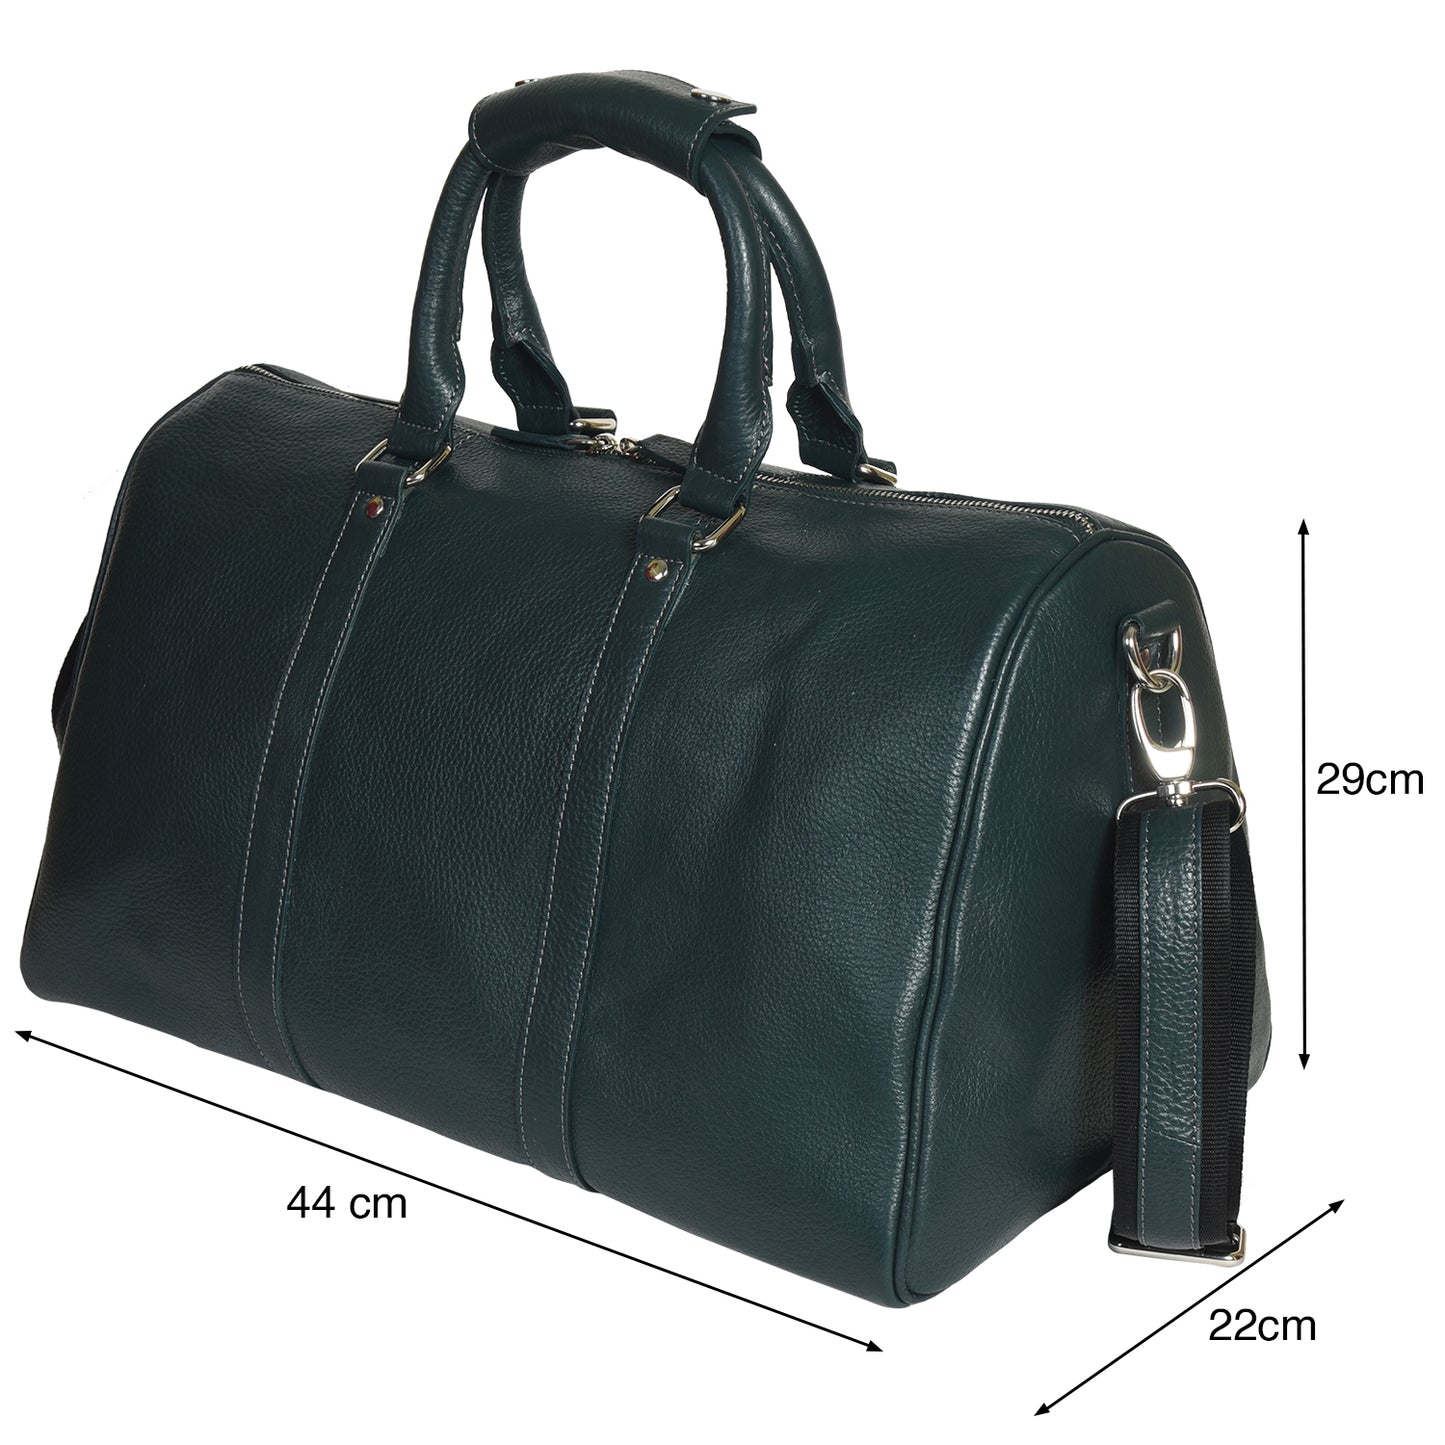 GT-KL1: G&T Full-grain Leather Small Holdall, Weekender, Luggage, Gym Bag, Duffel Bag, Overnight Bag